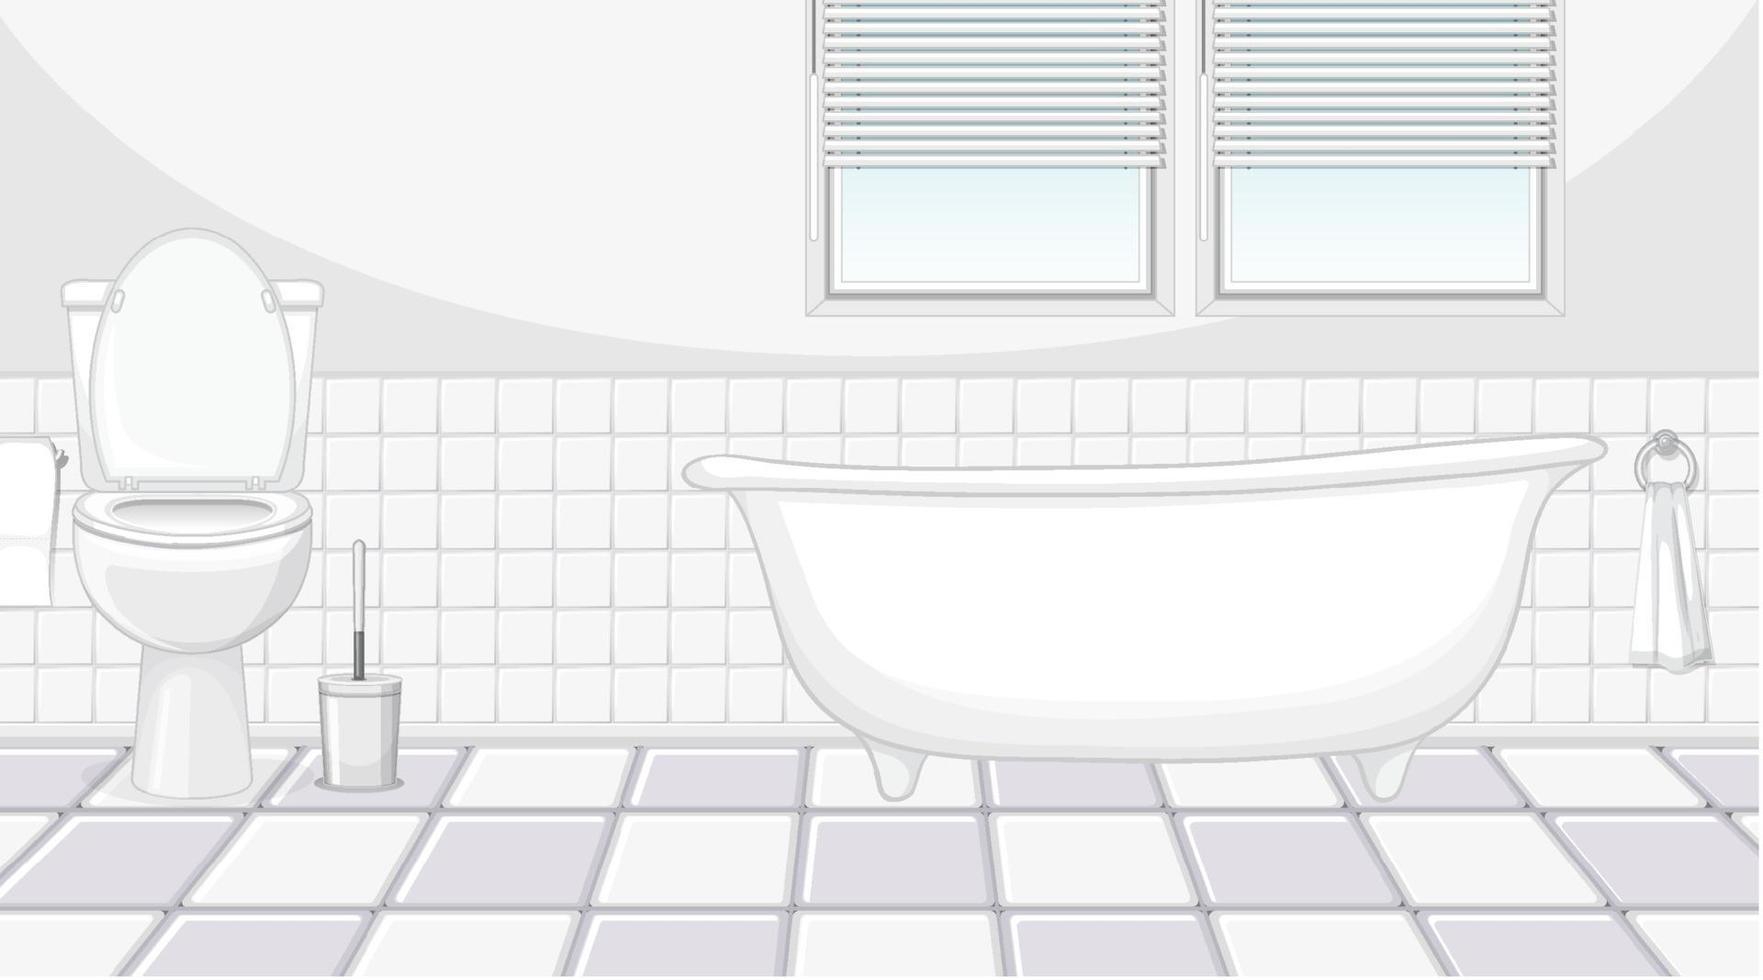 Bathroom interior design with furniture and bathtub vector